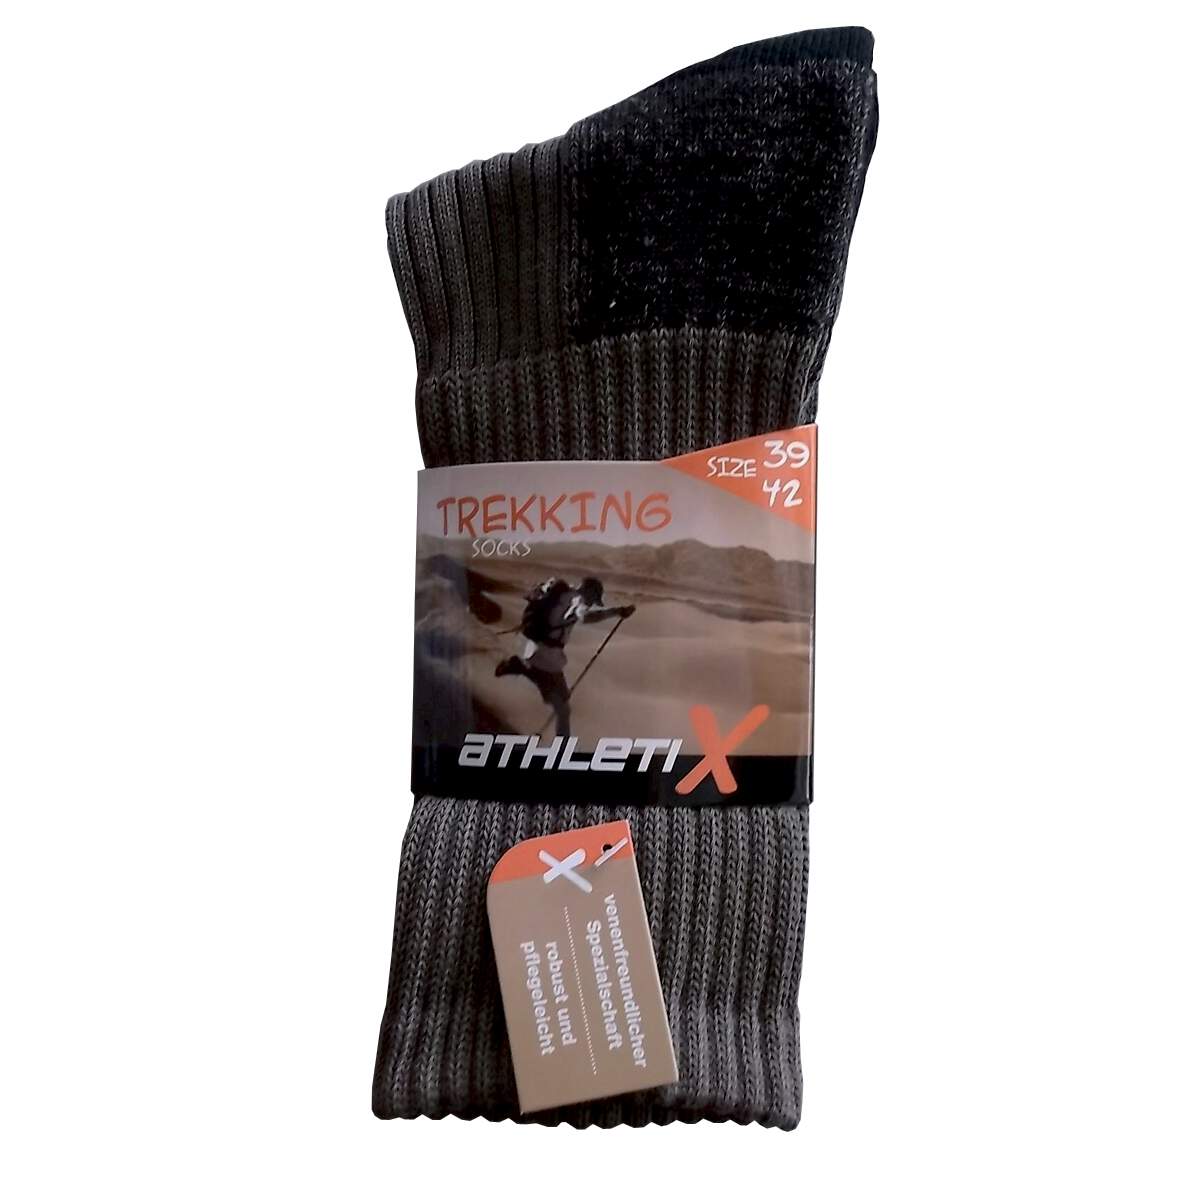 1214706 - Socken Athletix Trekking 099 2er